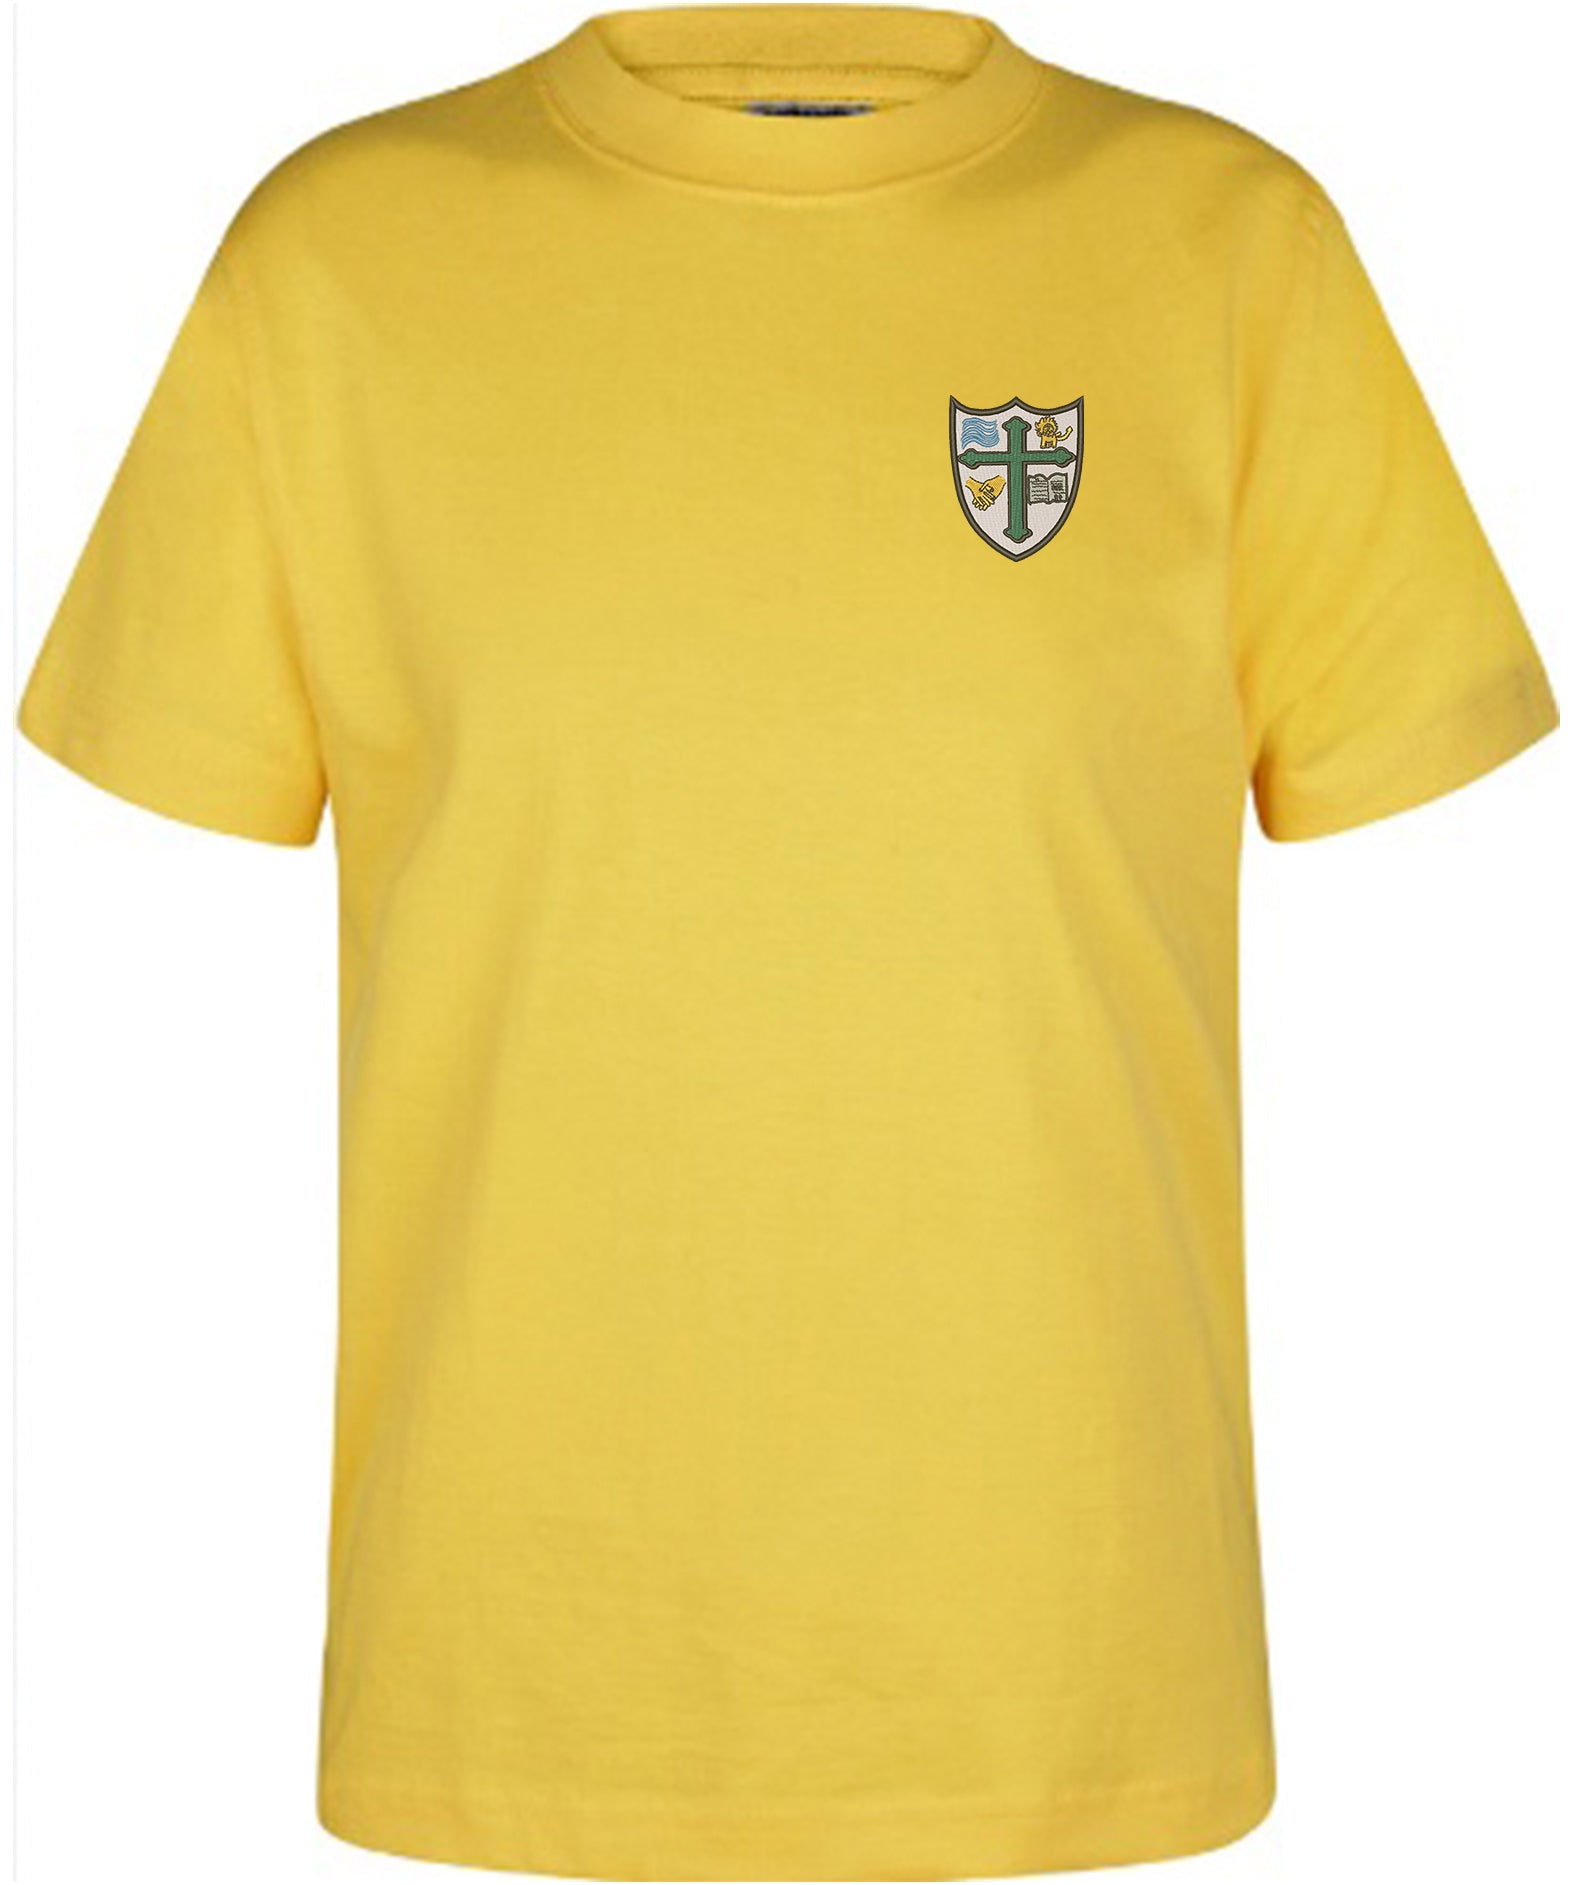 Highcliffe St Mark Primary School - Gold - Unisex Cotton T-Shirt - School Uniform Shop